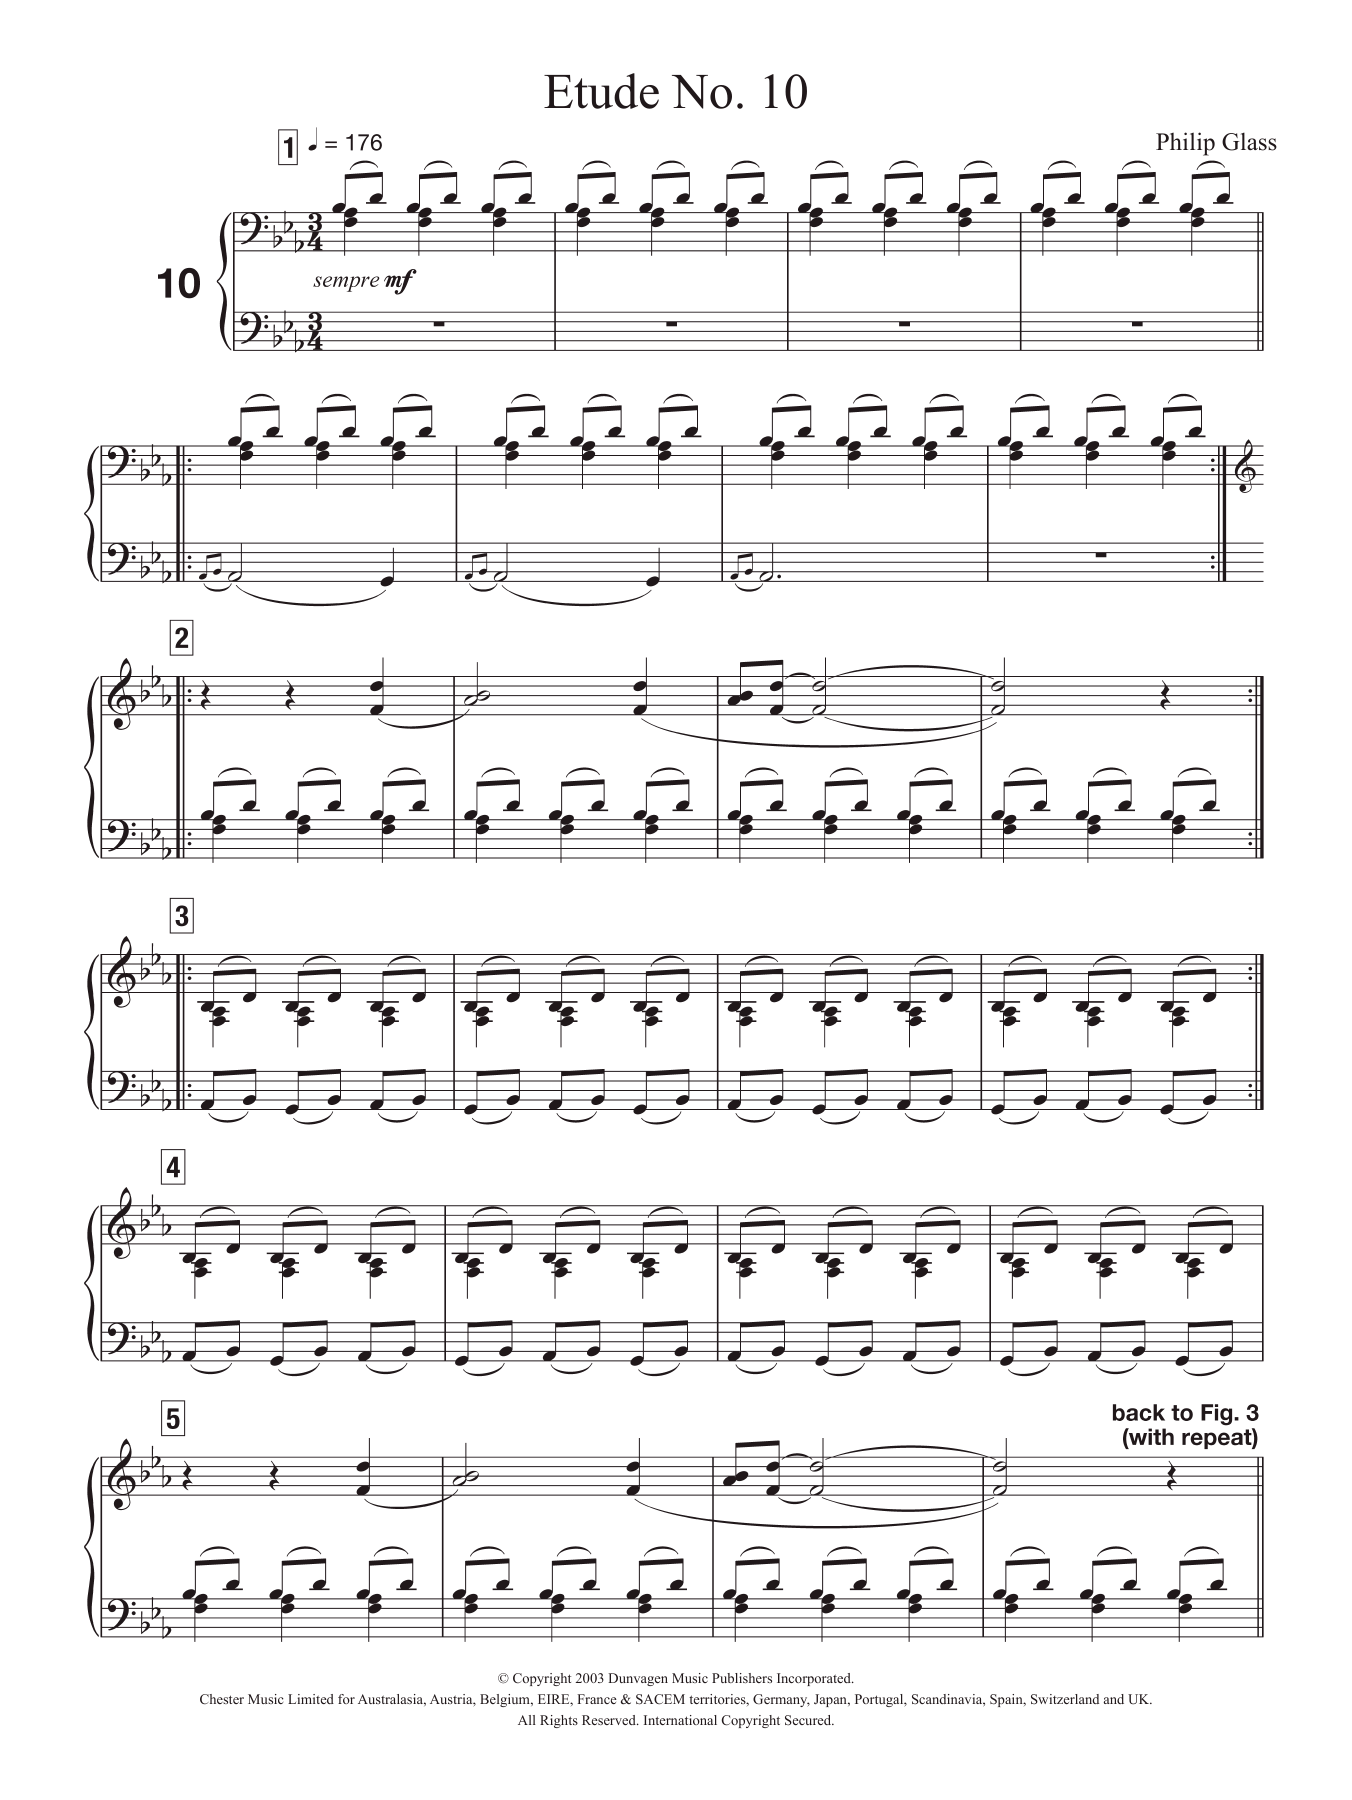 Download Philip Glass Etude No. 10 Sheet Music